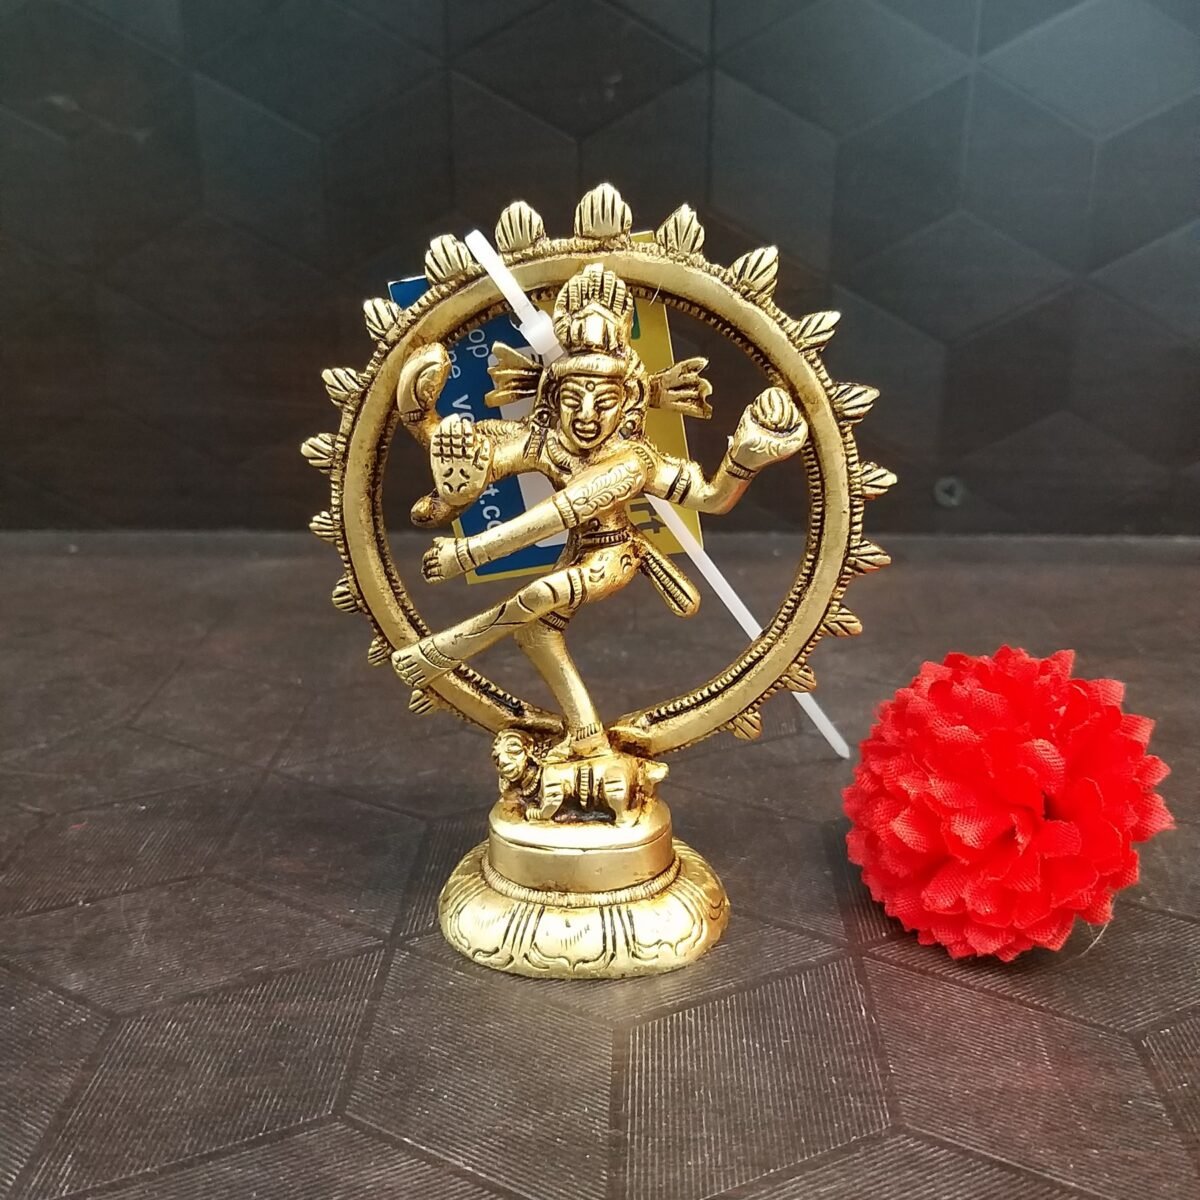 brass natarajar idol small home decor pooja items hindu god statues gift buy online india 1001 3